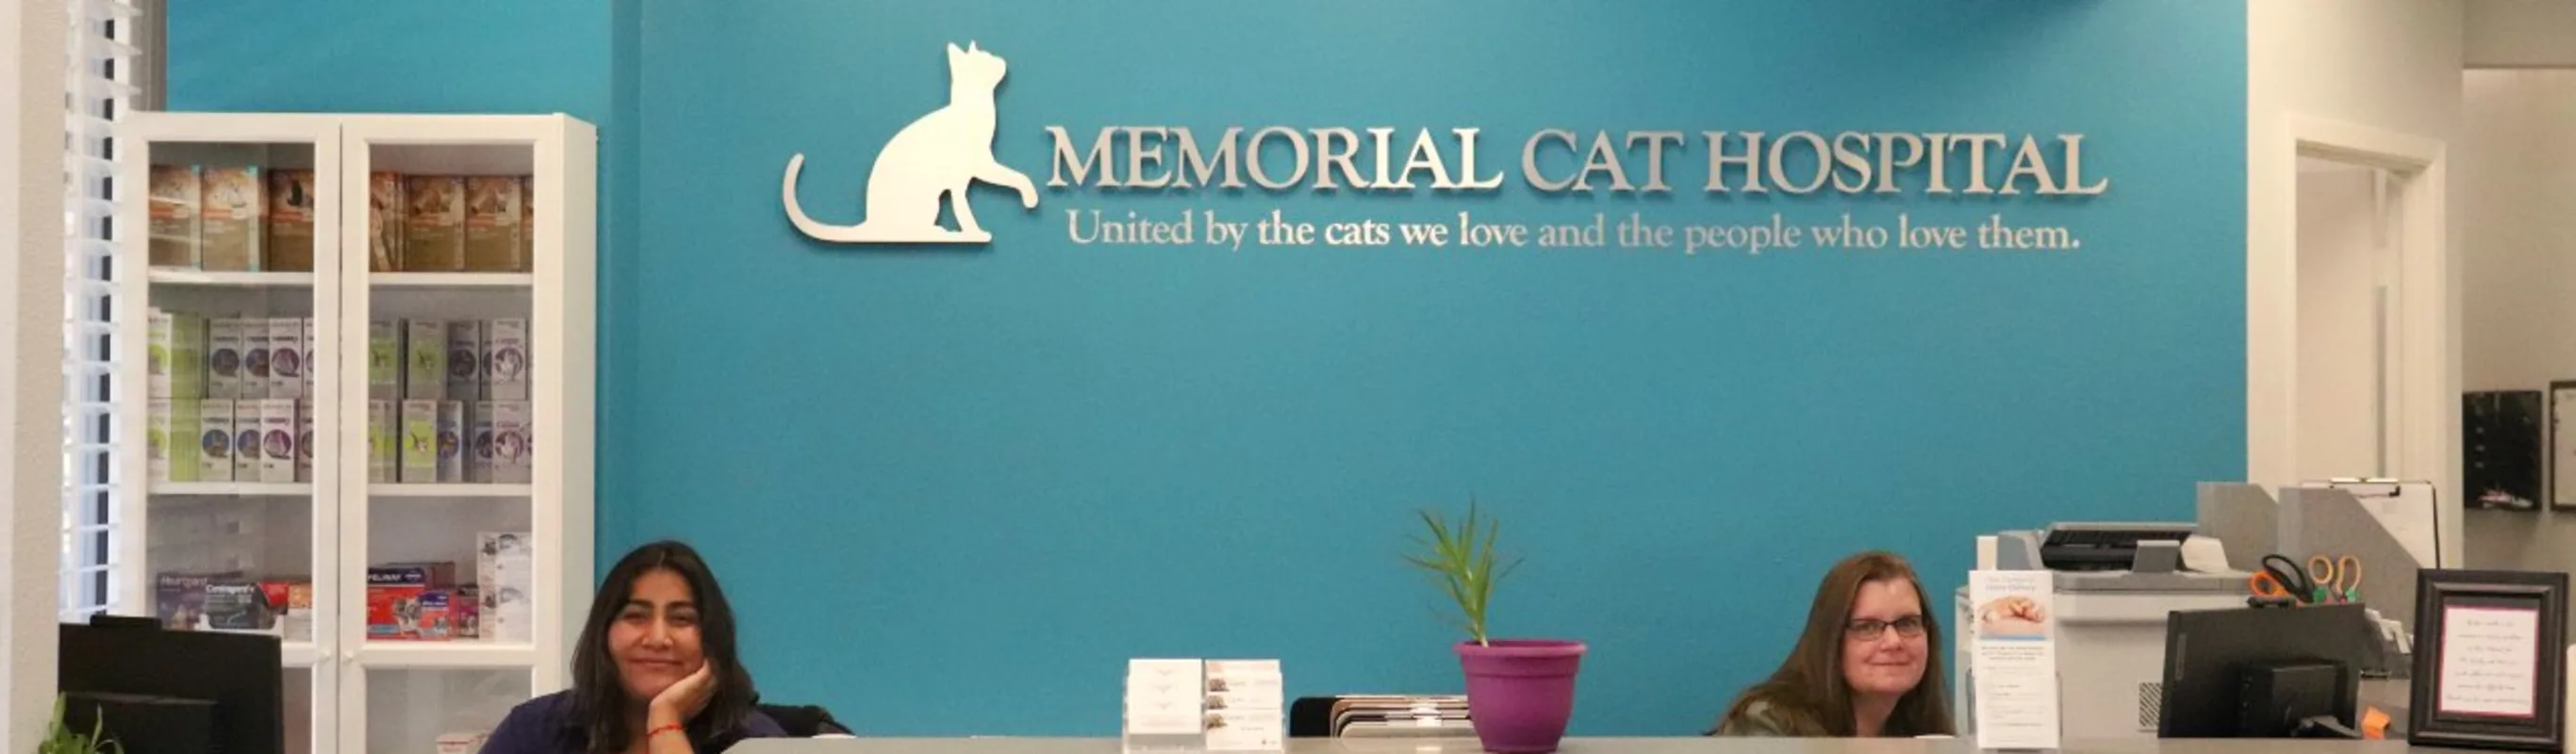 Memorial Cat Hospital front desk.